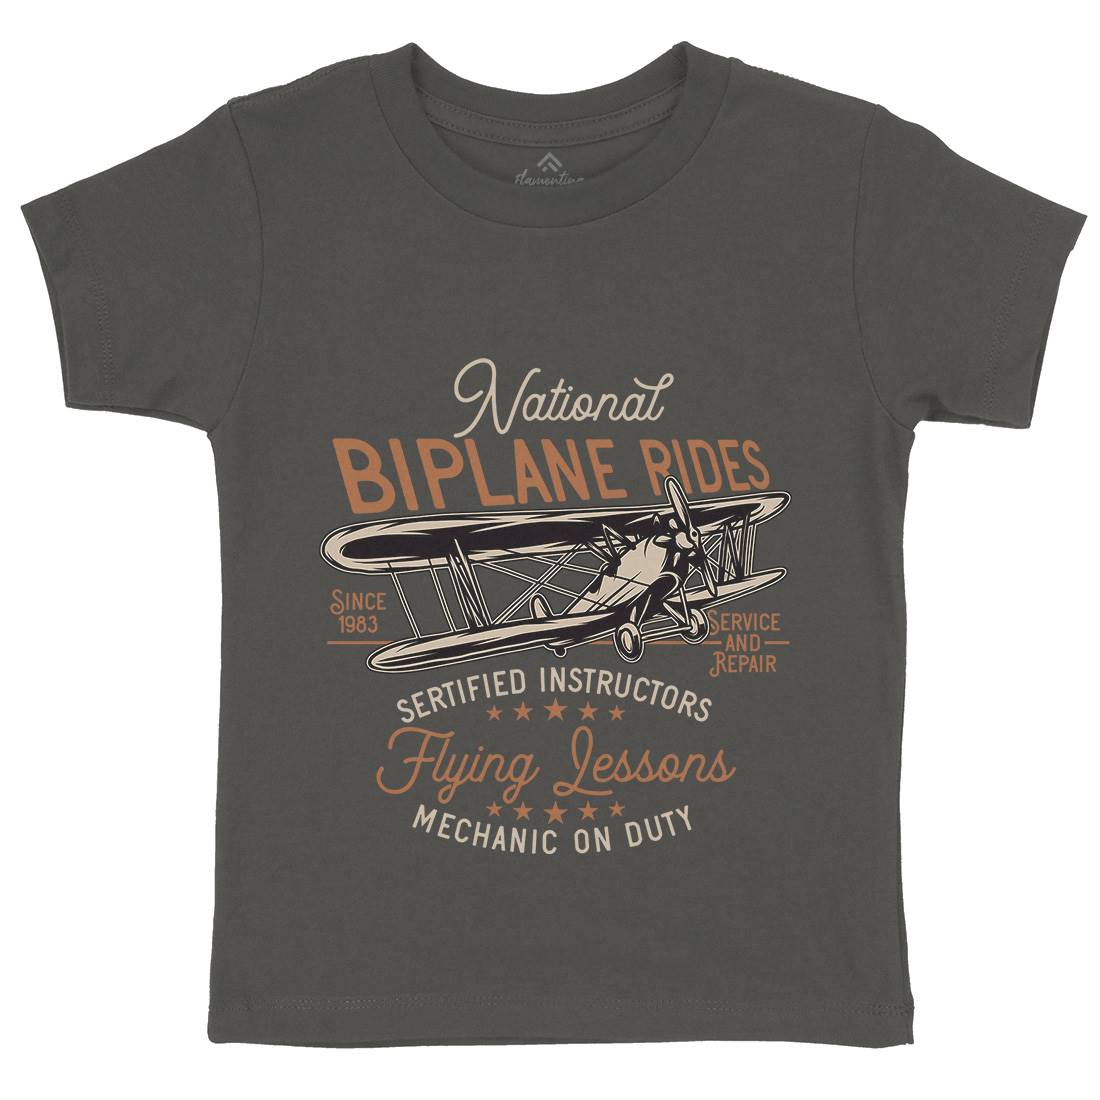 Biplane Rides Kids Crew Neck T-Shirt Vehicles D910